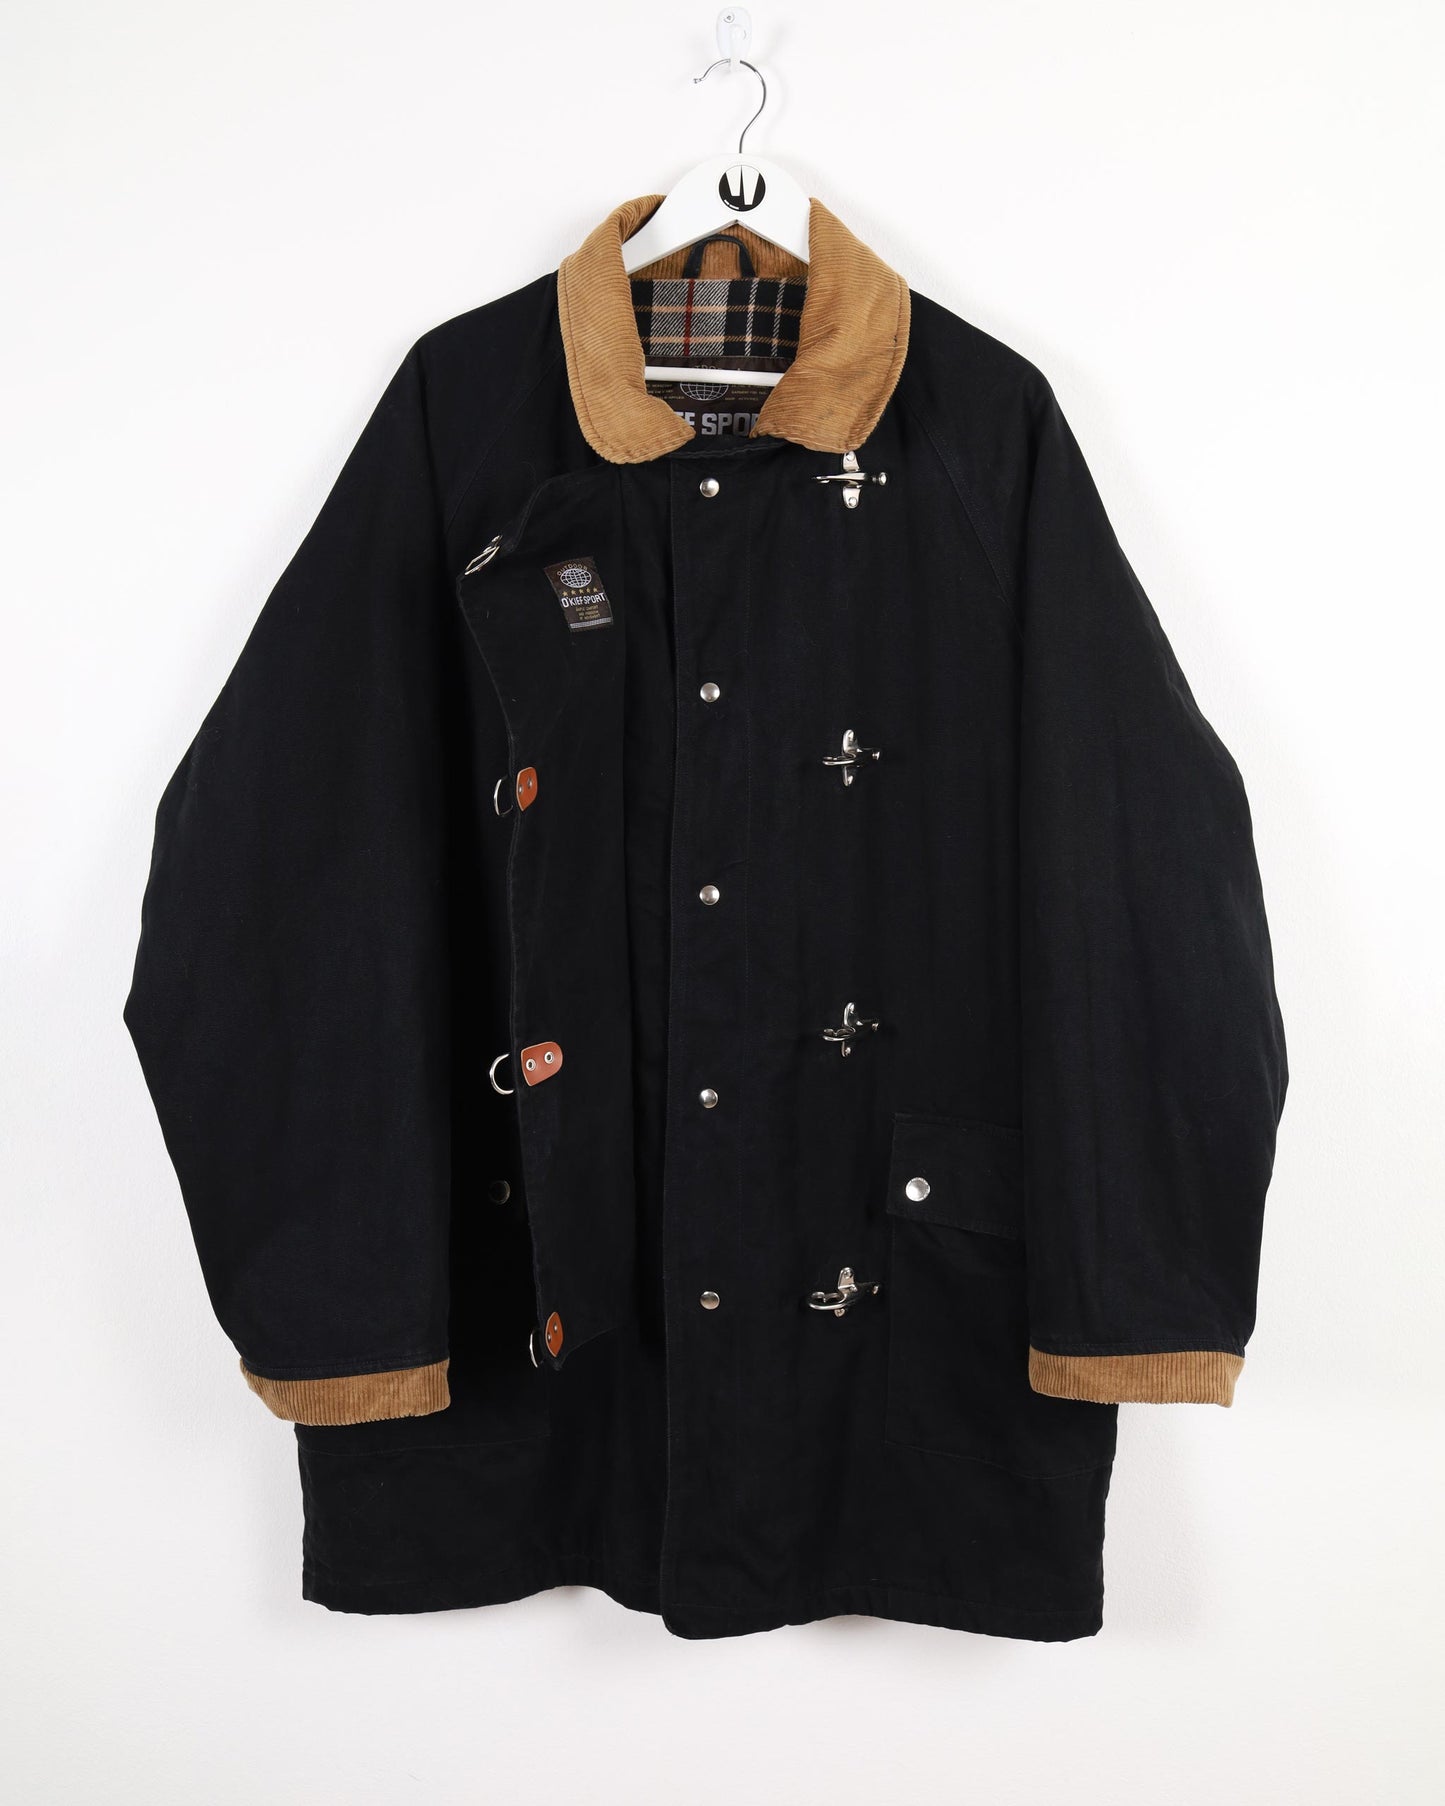 O’Kief Sport Buckle Jacket with Corduroy Neck Flaps and Sleeve, Black XL